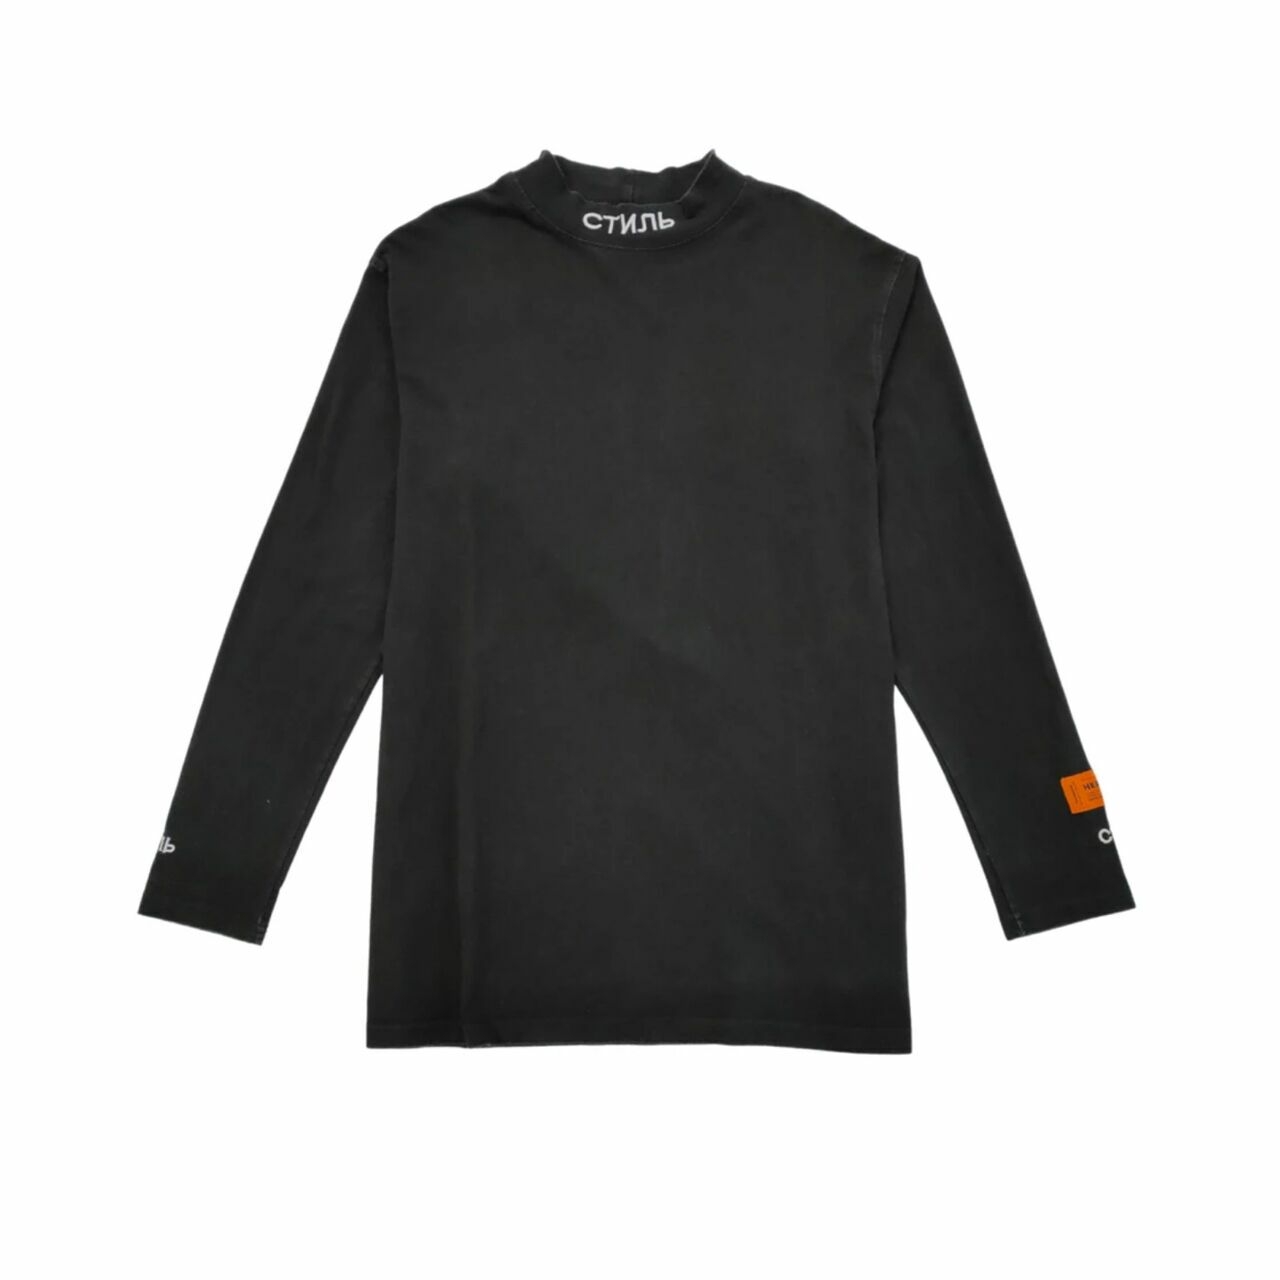 Heron Preston Black Long Sleeve CTNMB Mock Neck T-Shirt